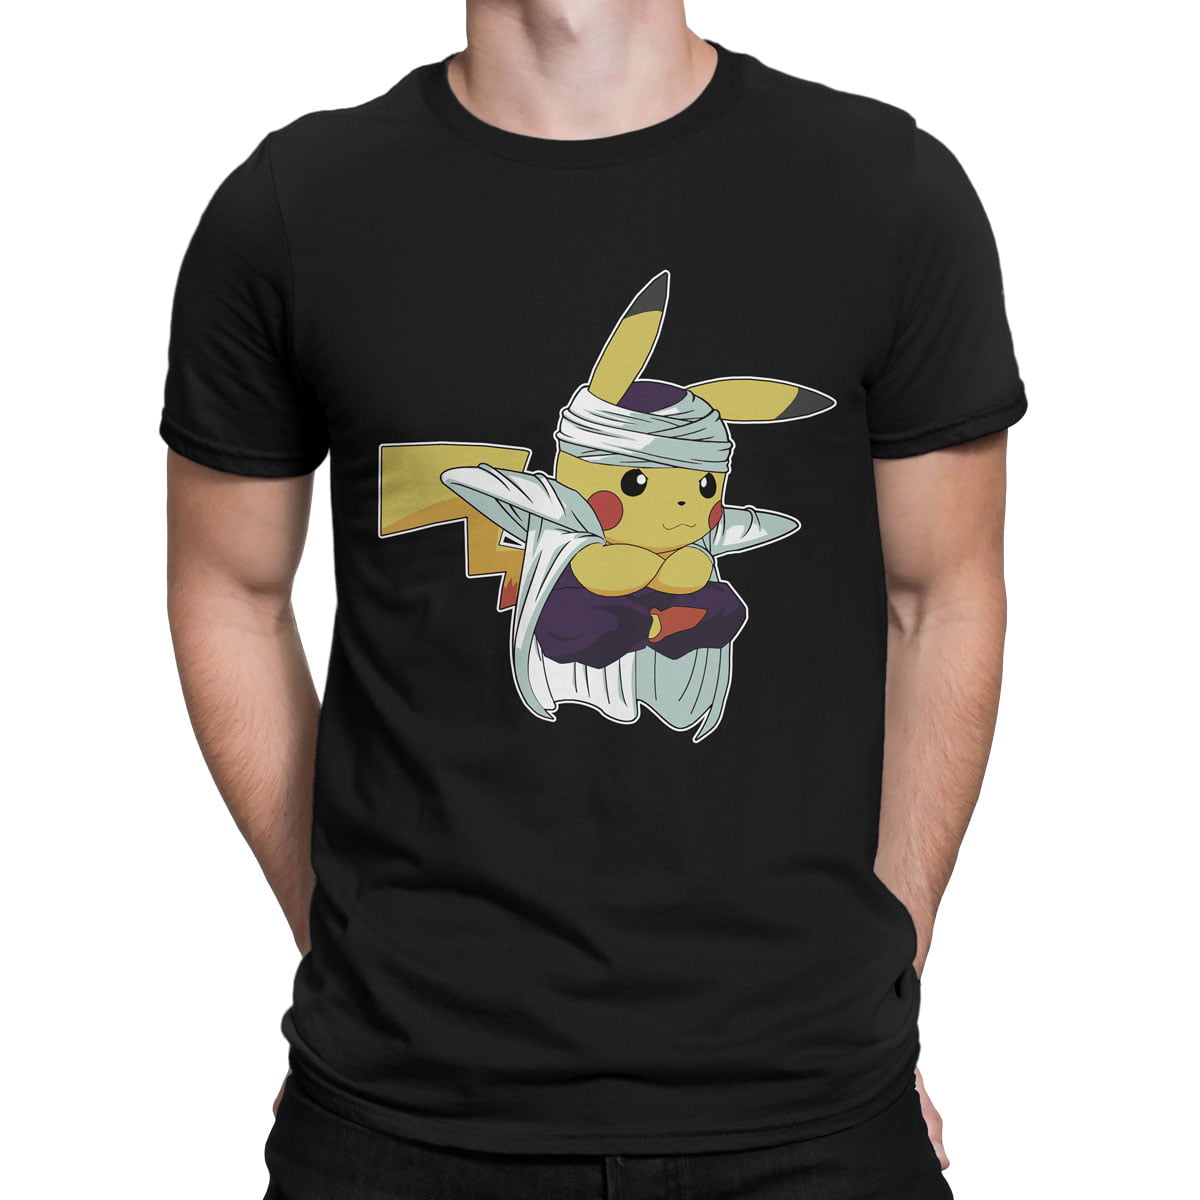 Dragonball 4 shirt s erkek - dragon ball piccolo ile pikachu erkek t-shirt - figurex